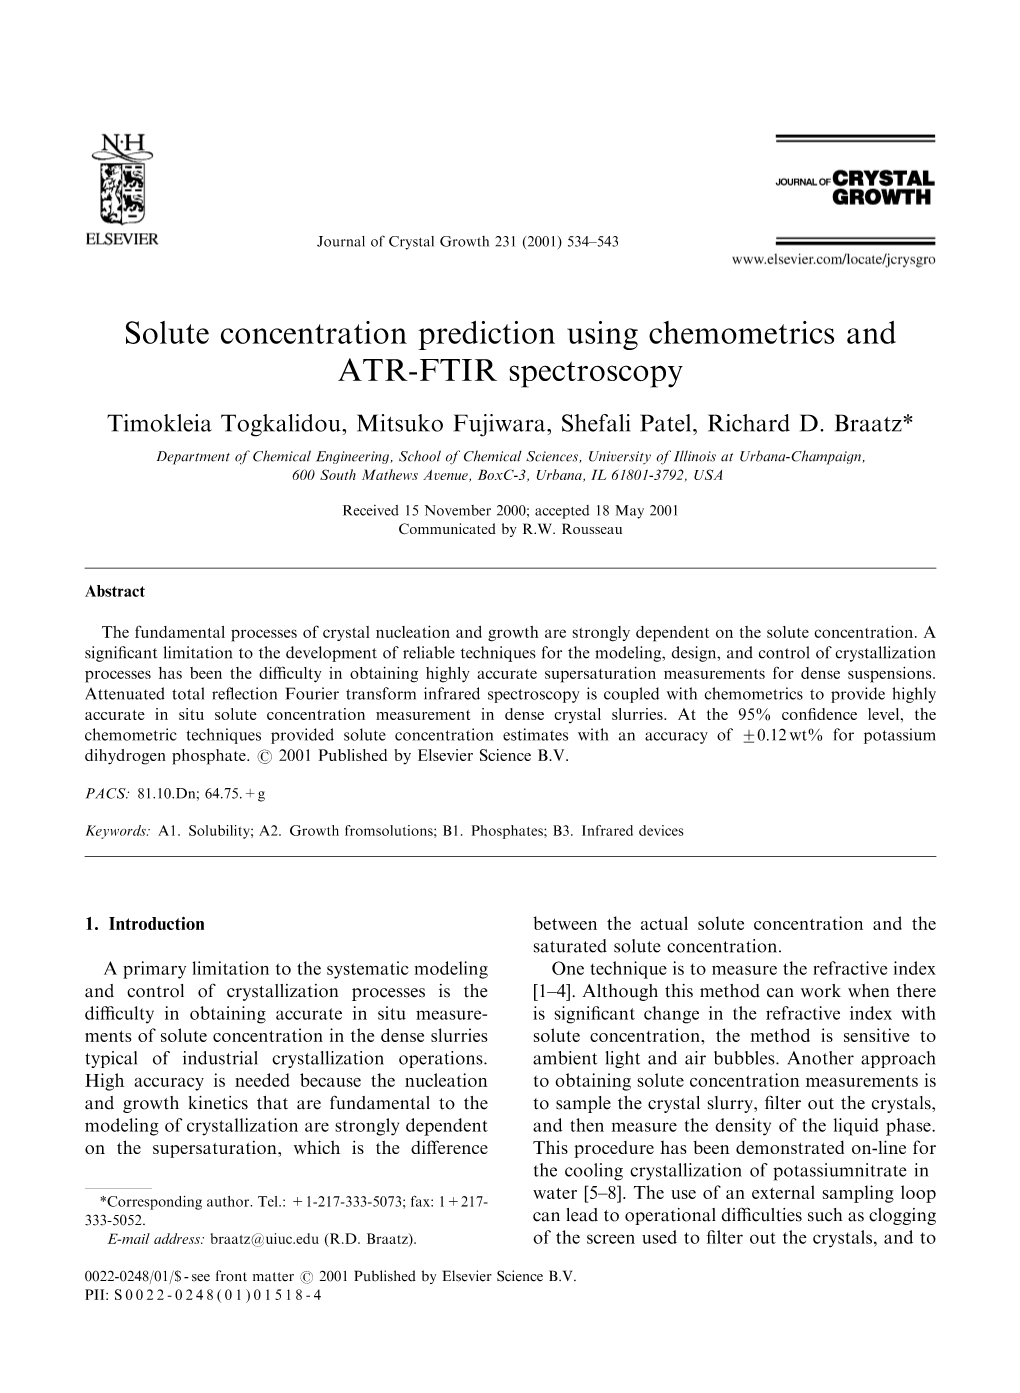 Solute Concentration Prediction Using Chemometrics and ATR-FTIR Spectroscopy